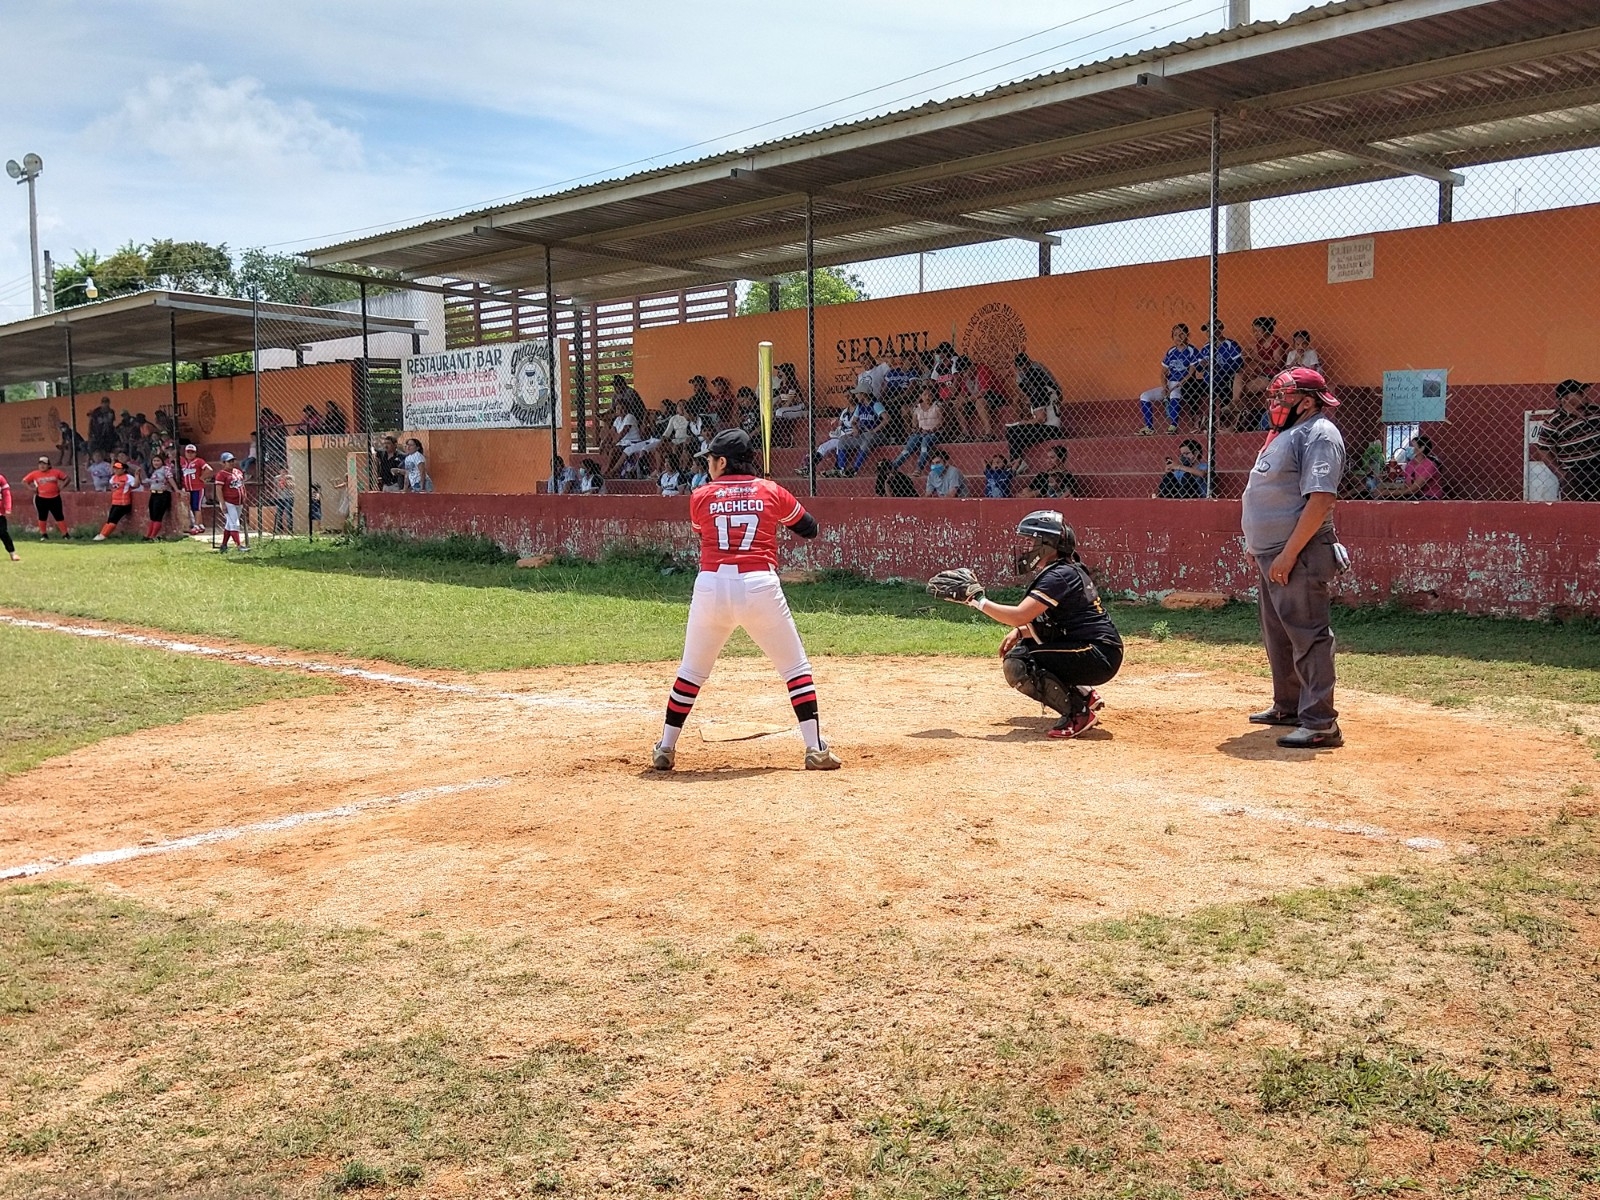 Realizan partido de softbol femenil para apoyar a joven con tumor en Peto